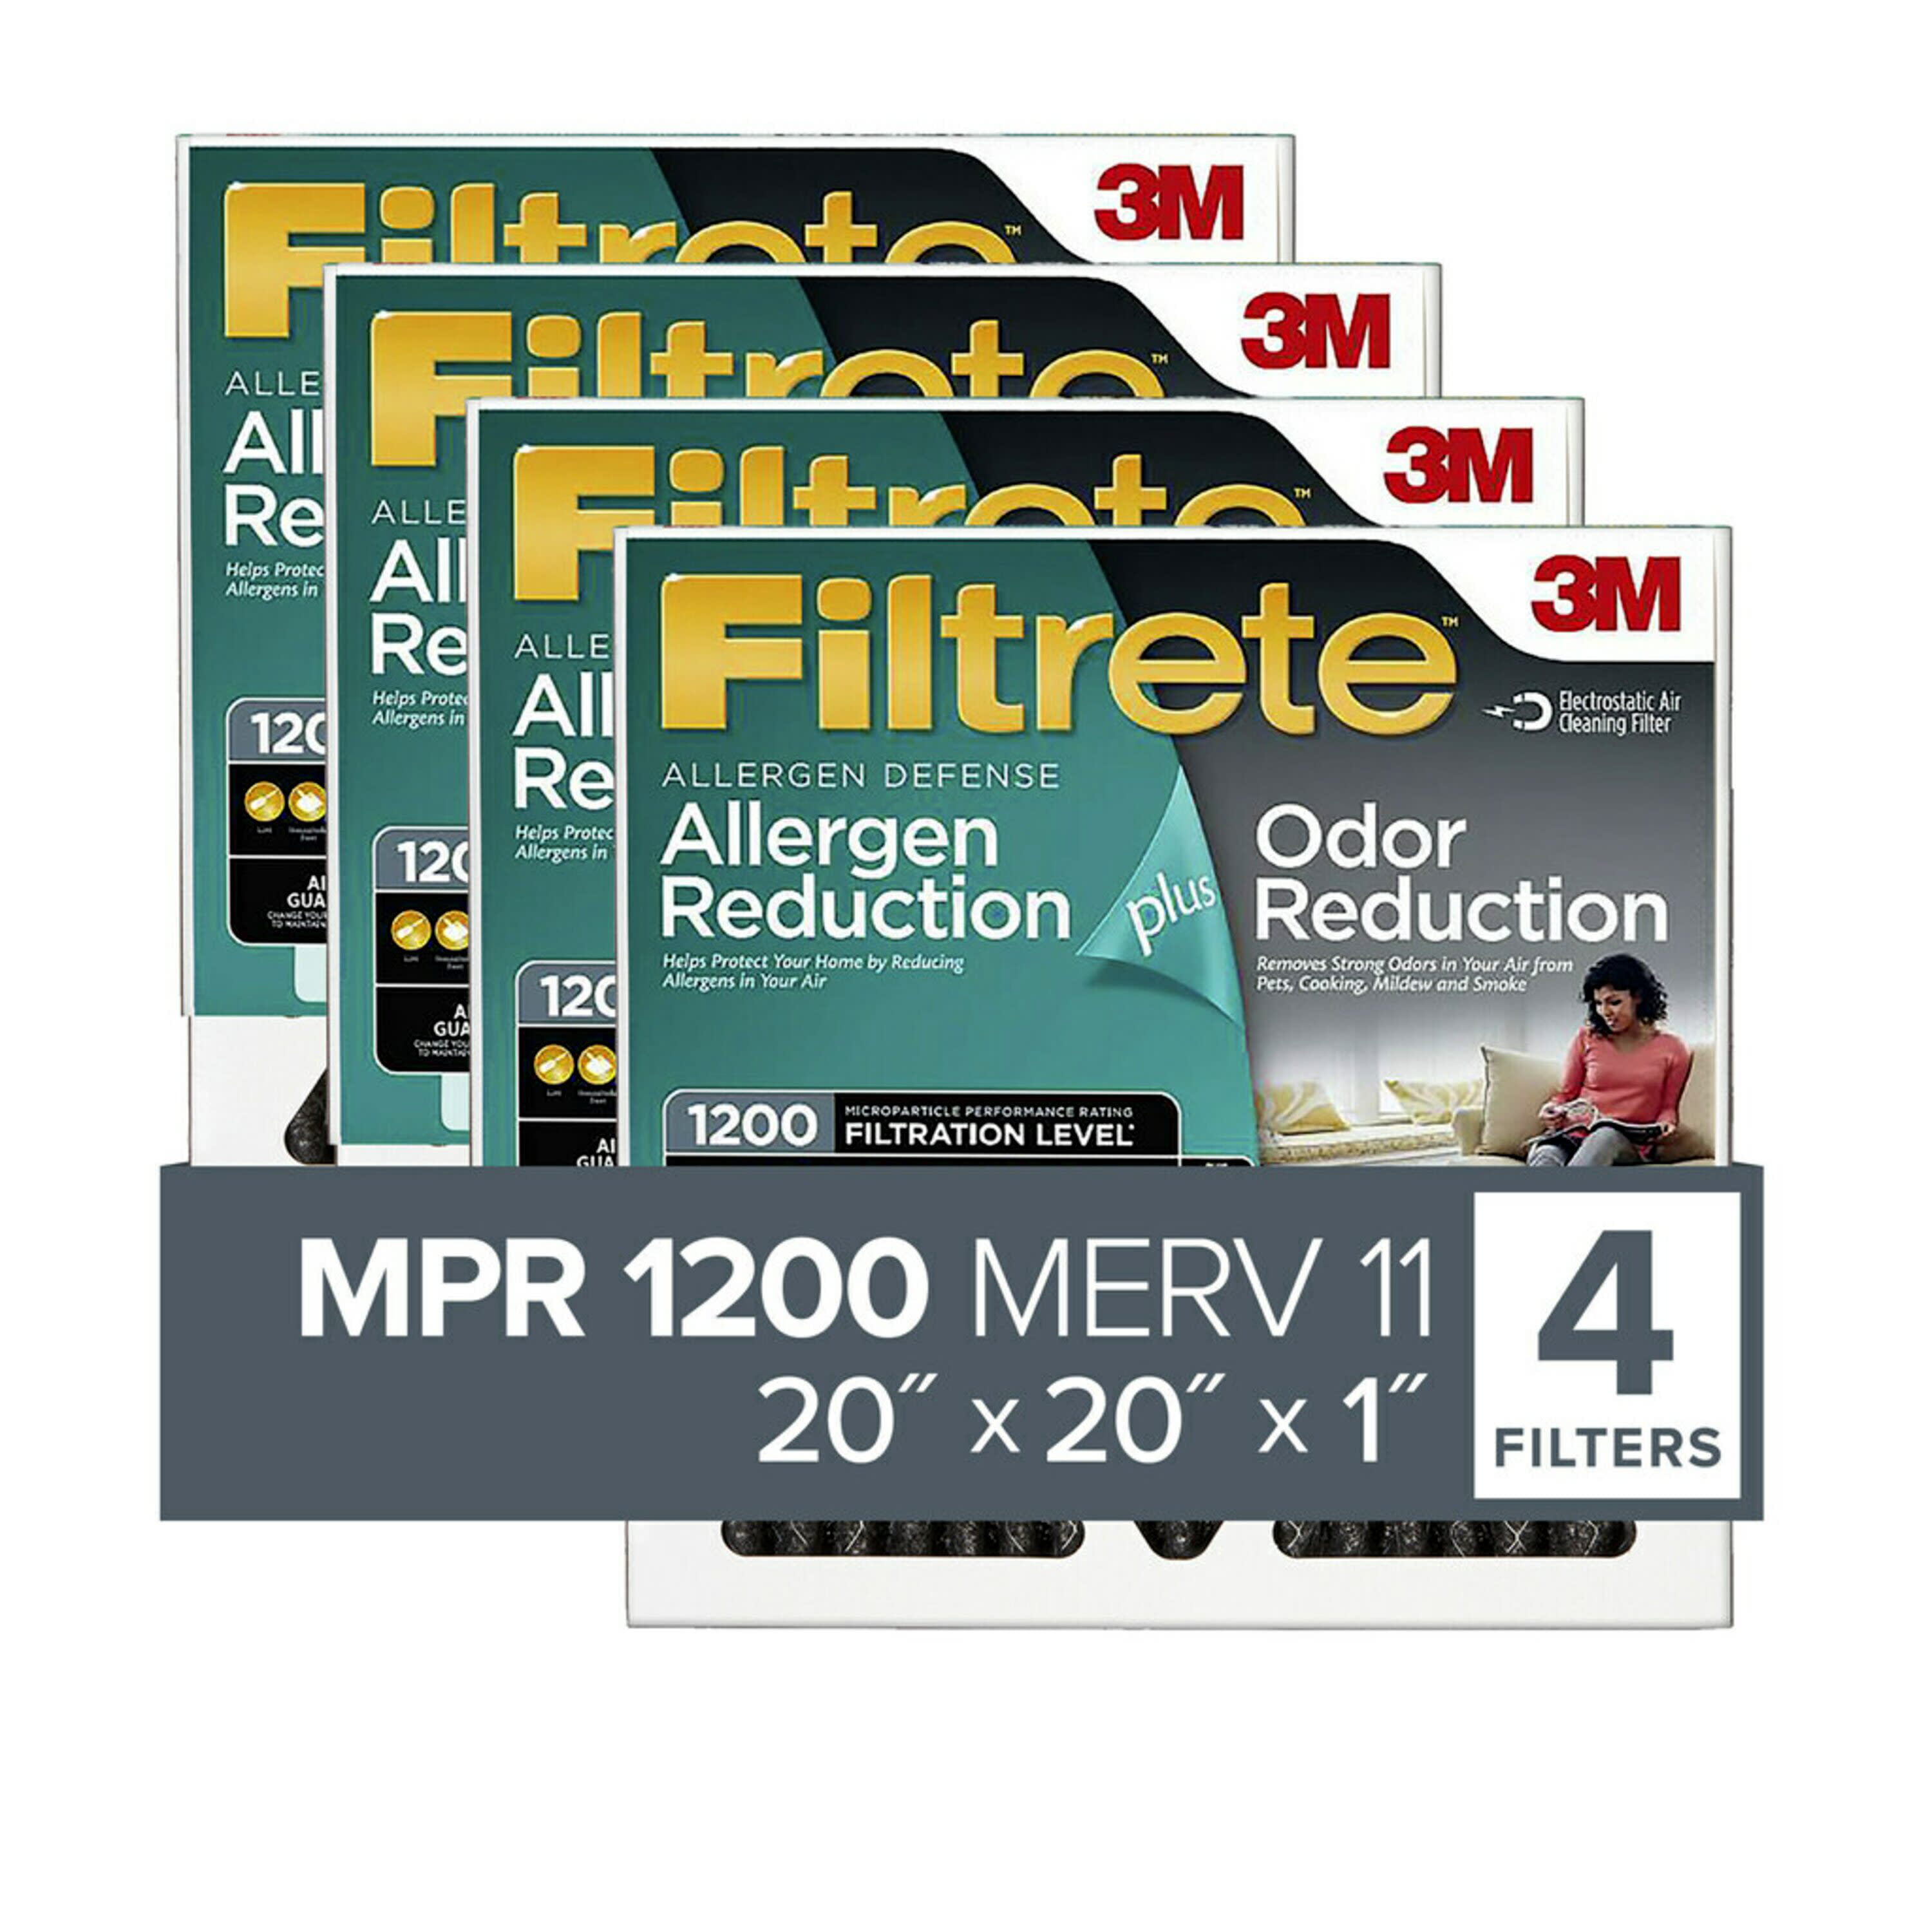 filtrete-20x20x1-allergen-plus-odor-reduction-hvac-furnace-air-filter